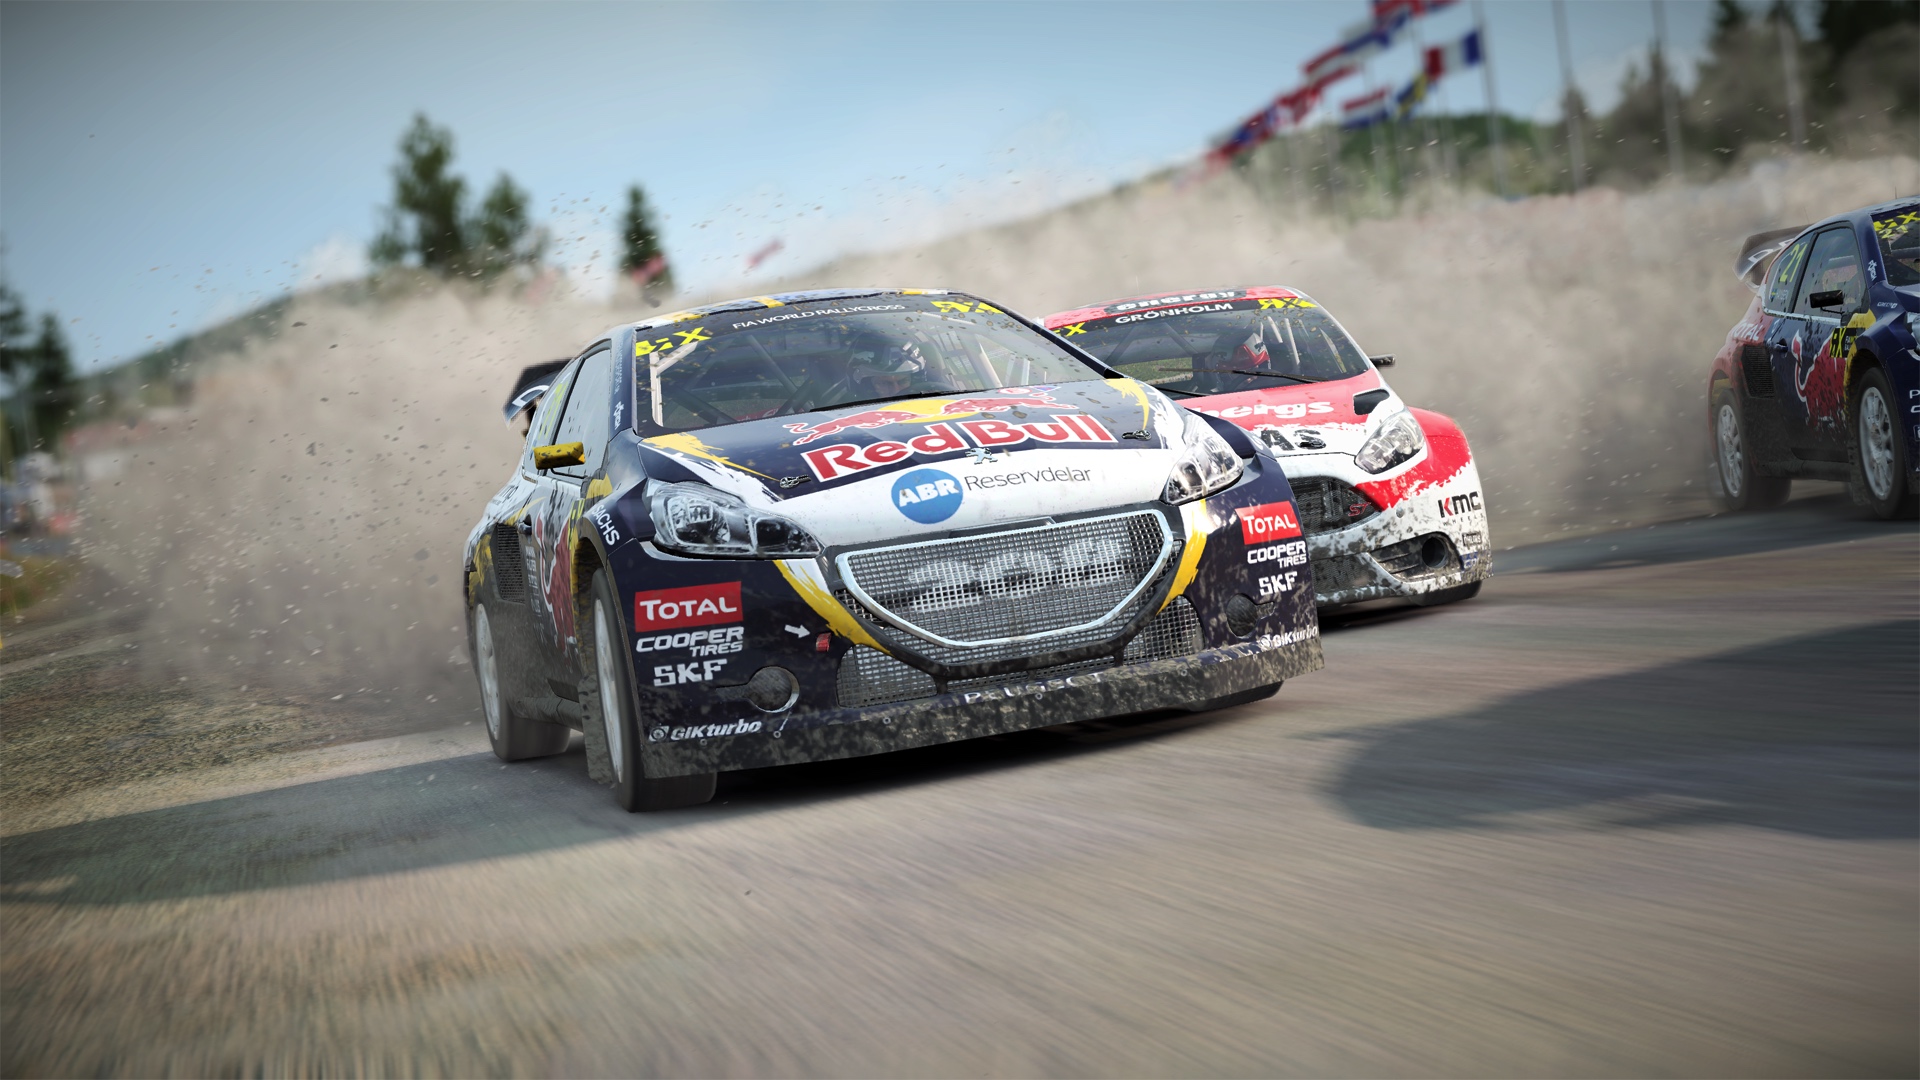 Wallpaper Cars, Race, Dirt 4, video game